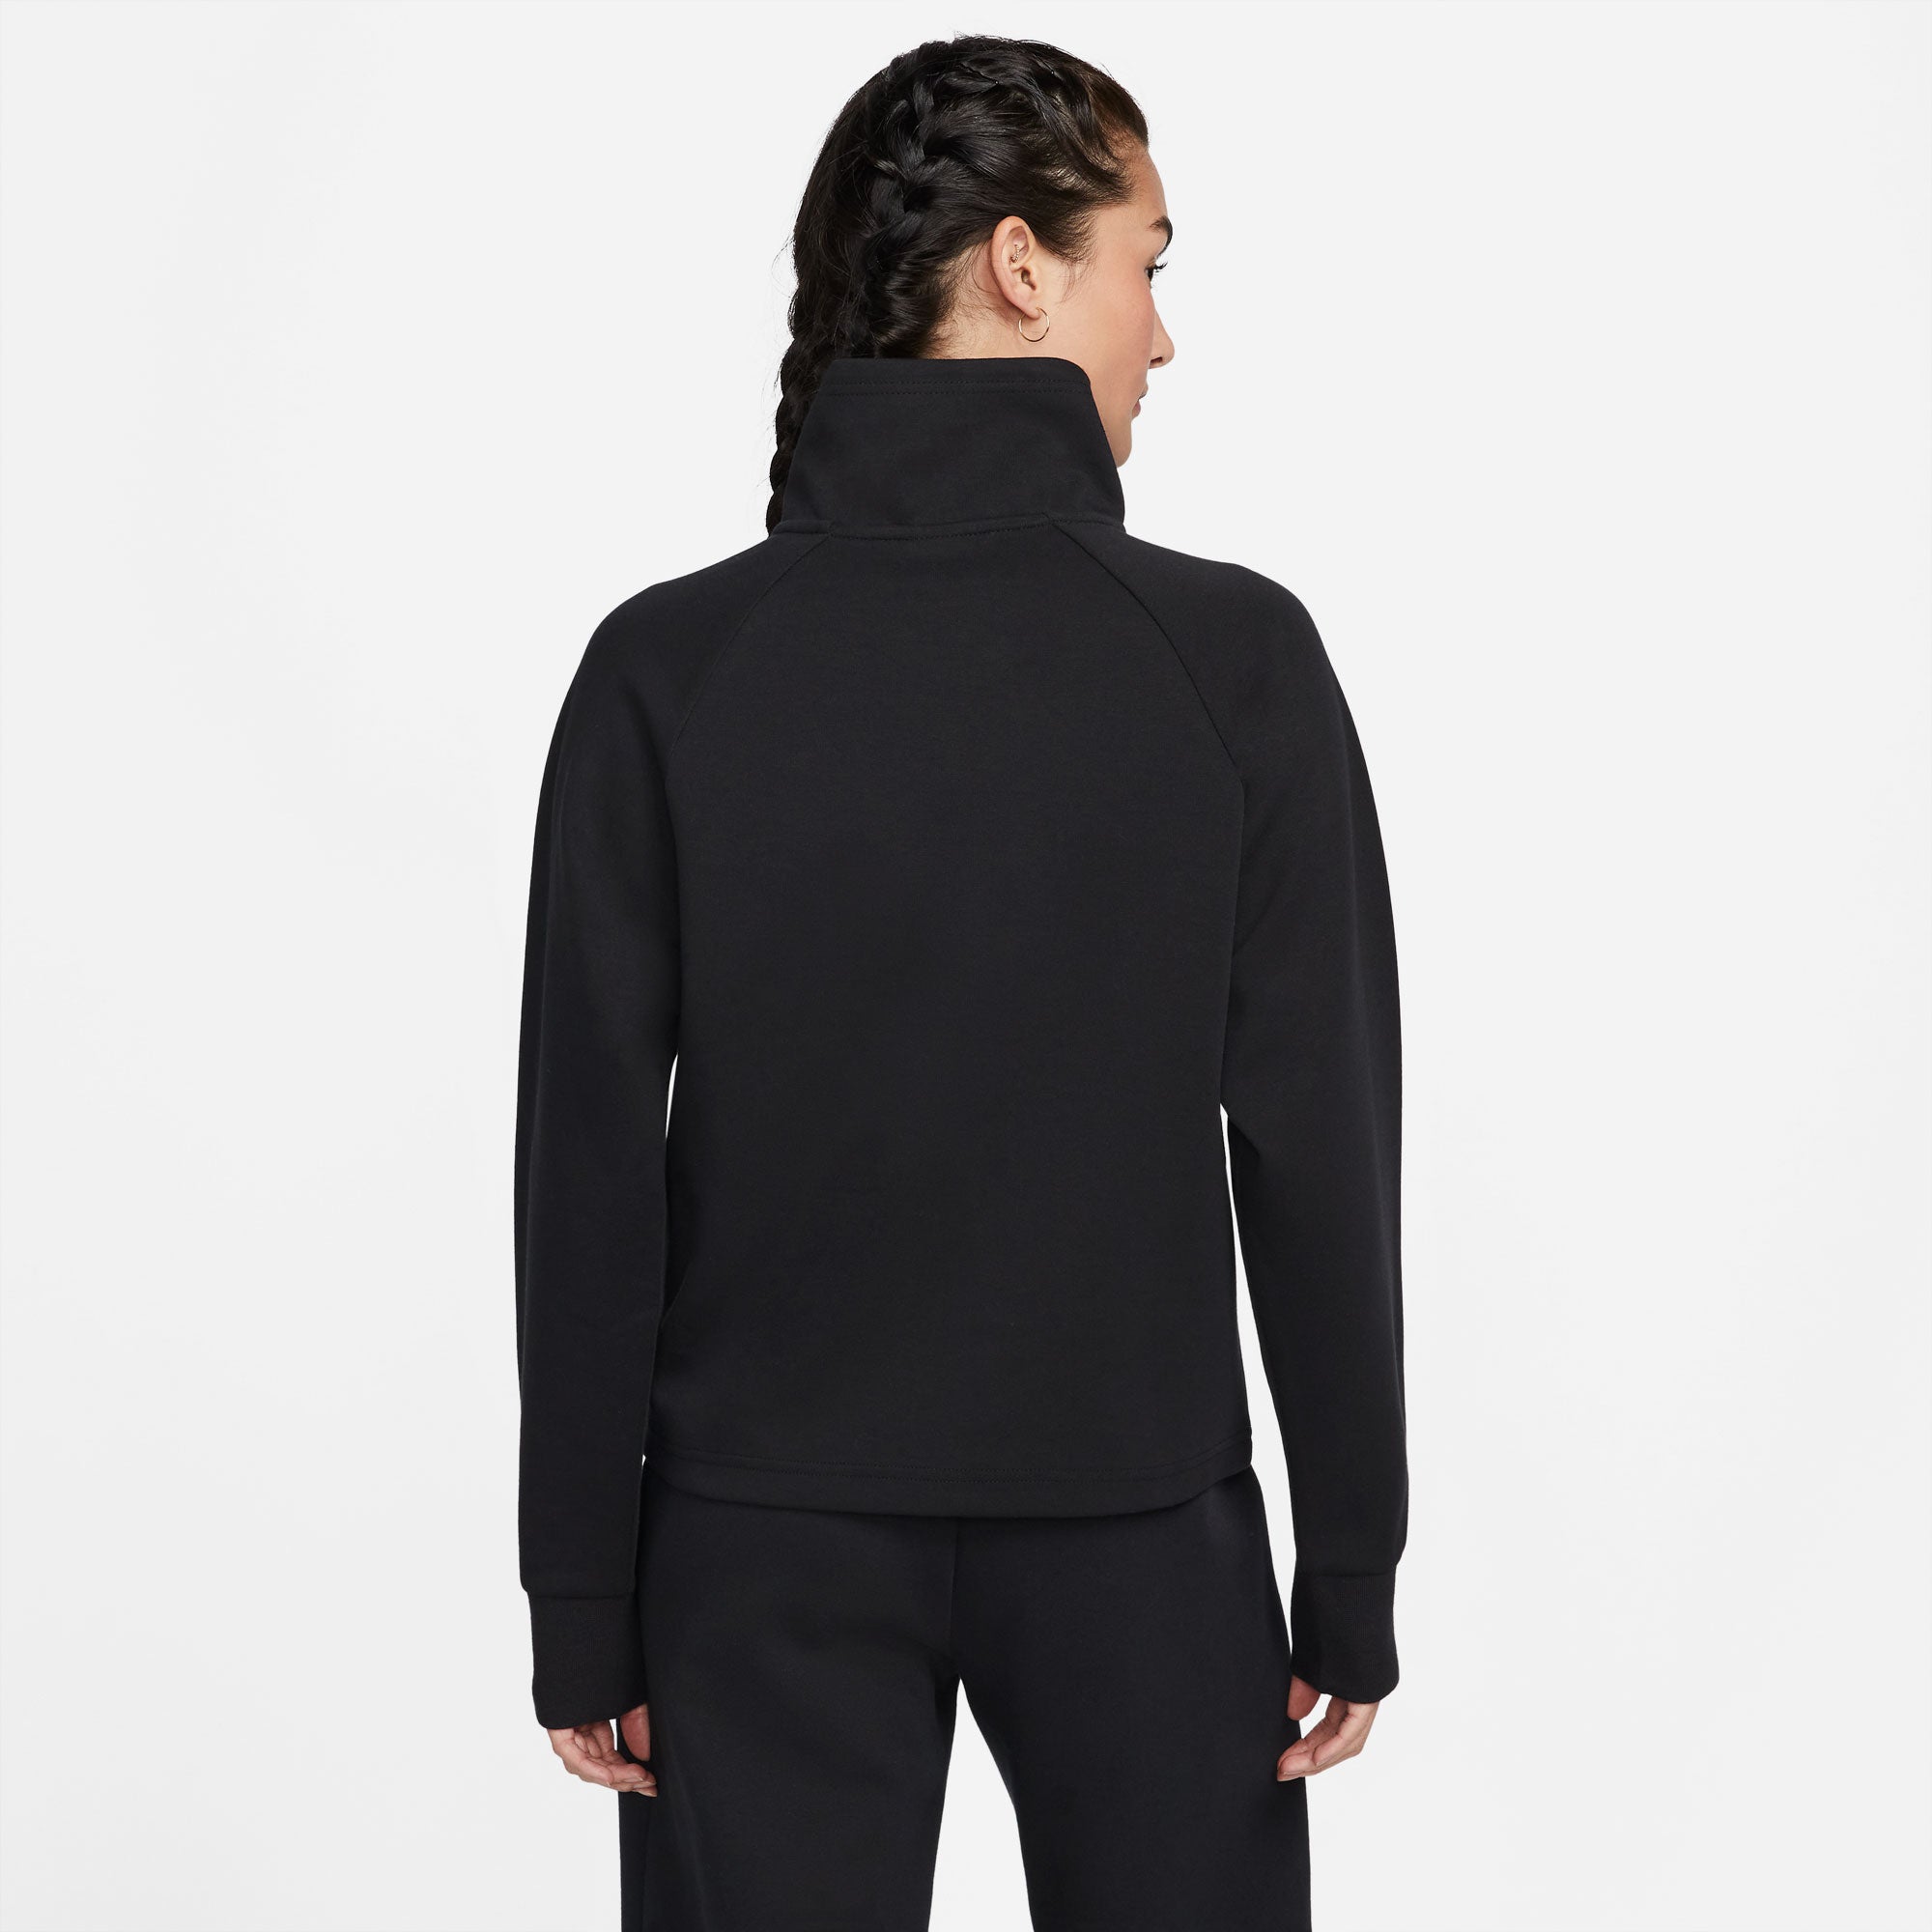 Nike Tech Fleece Women's 1/4-Zip Top Black (2)